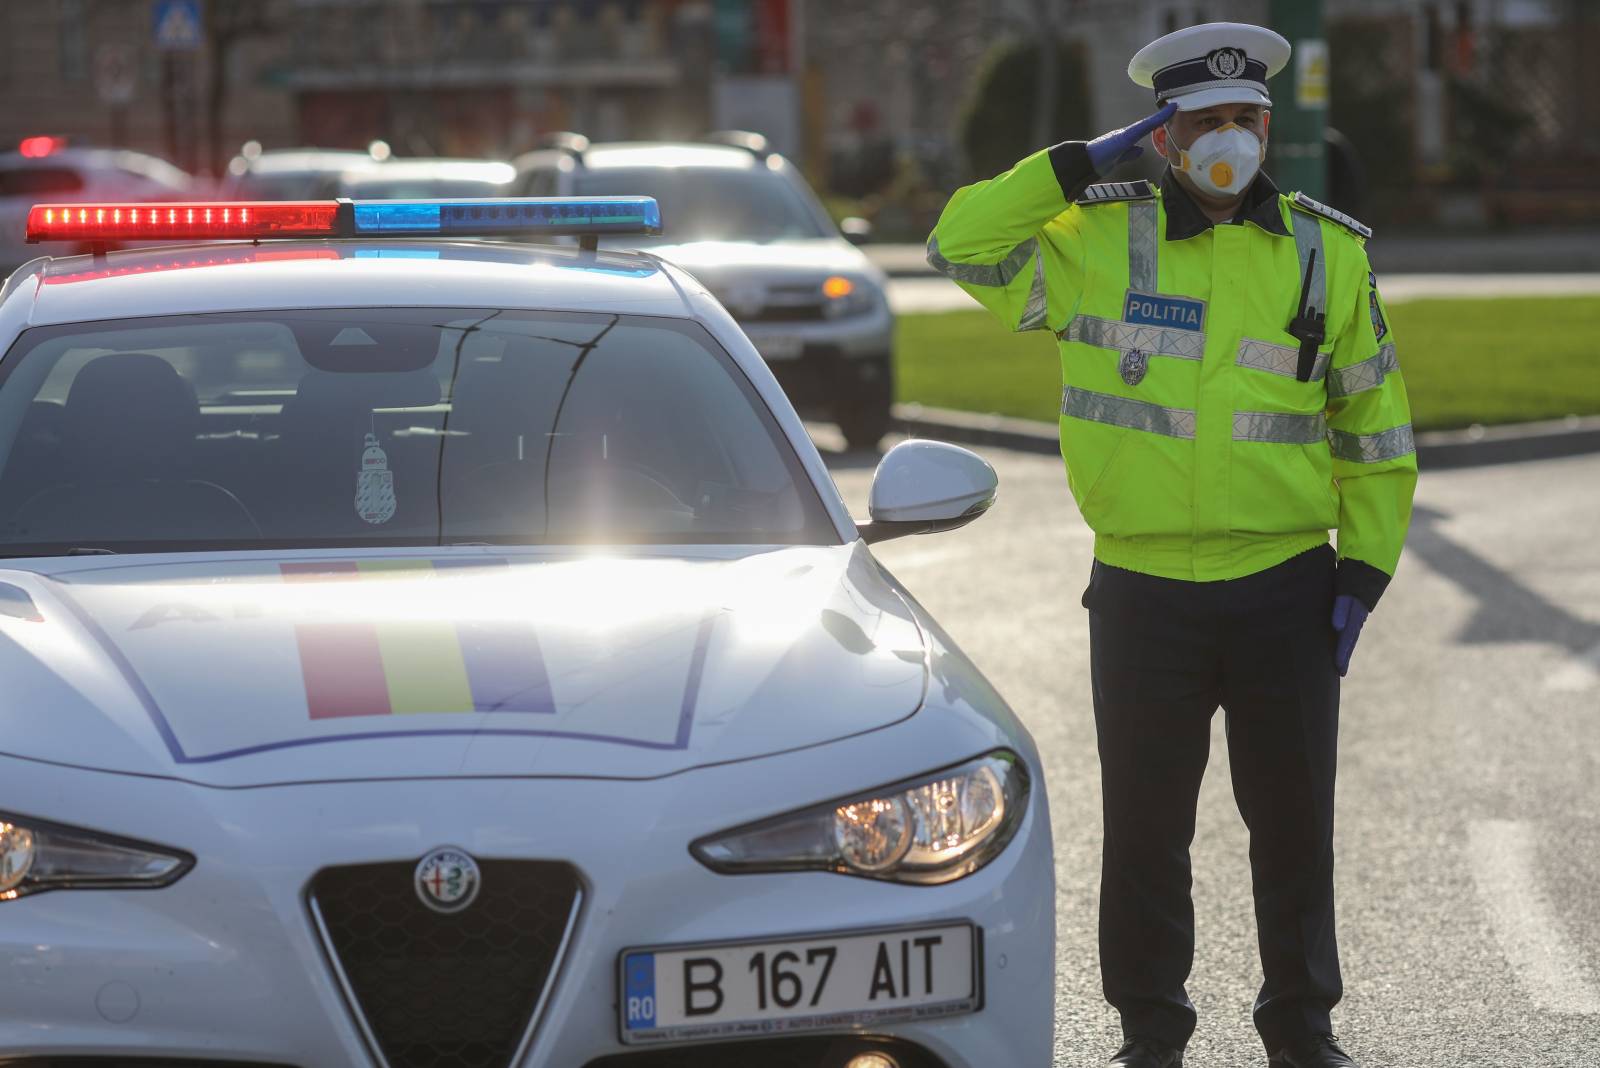 Rumänska polisens påskresor